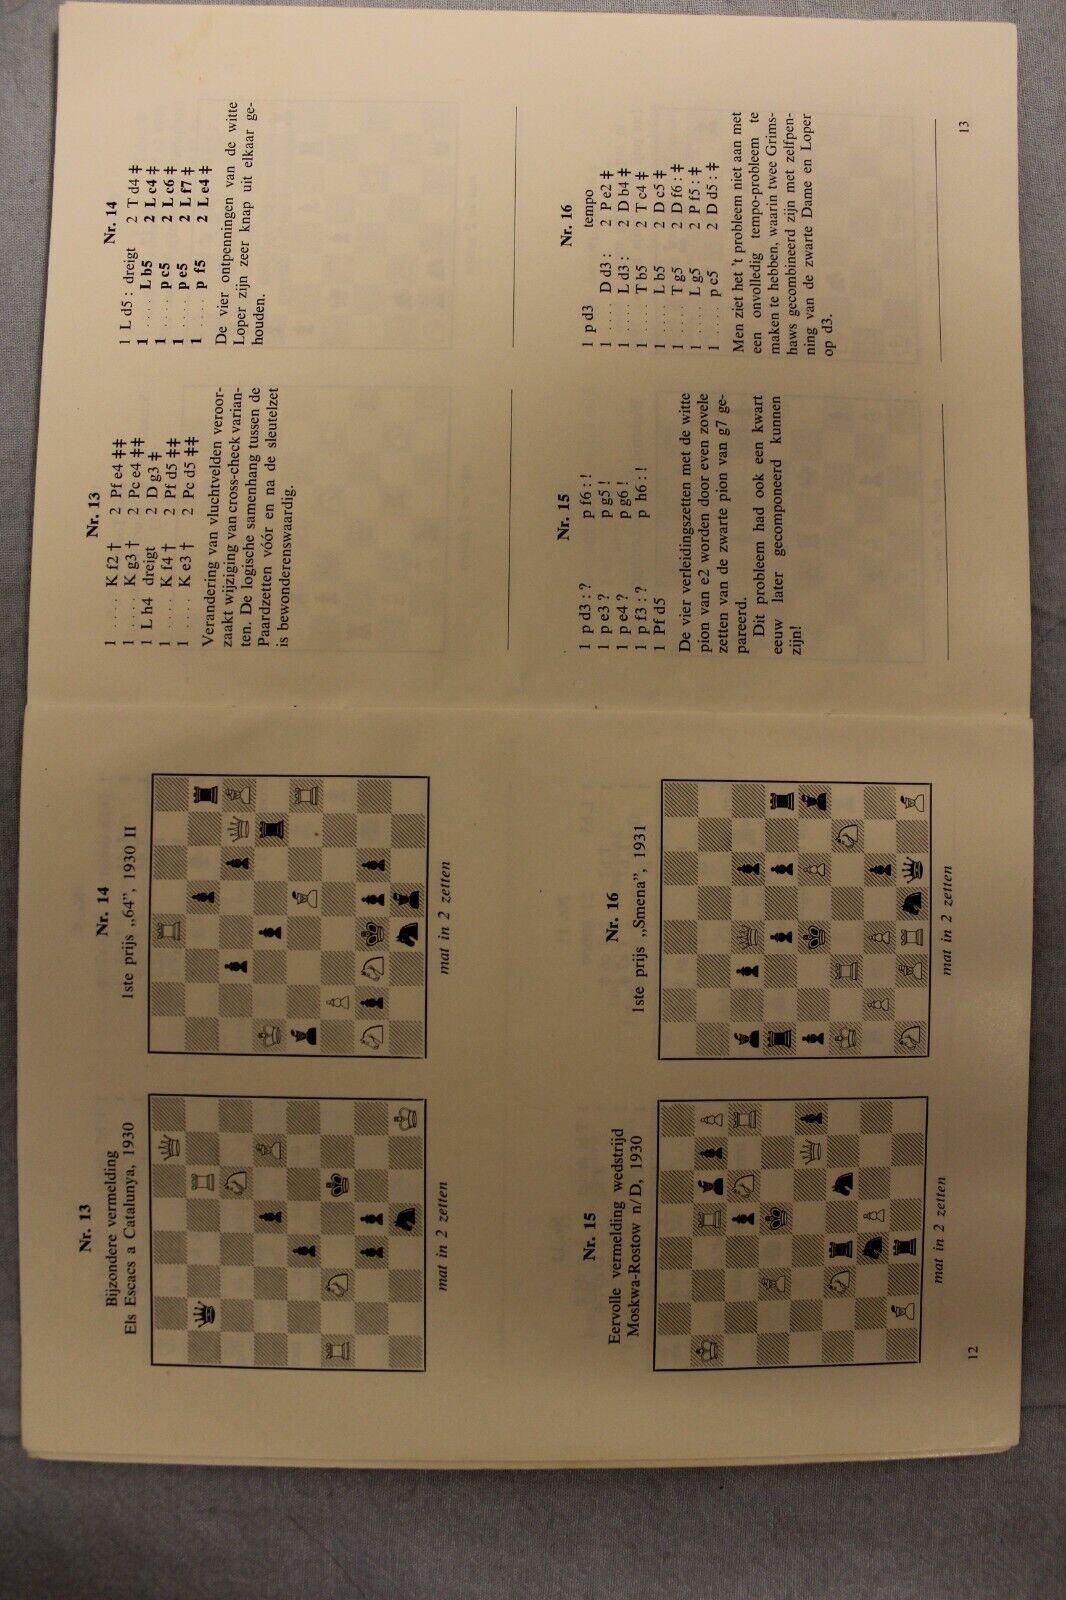 11011.Chess Book On Composition signed by author Twee Zielen Twee Gedachten